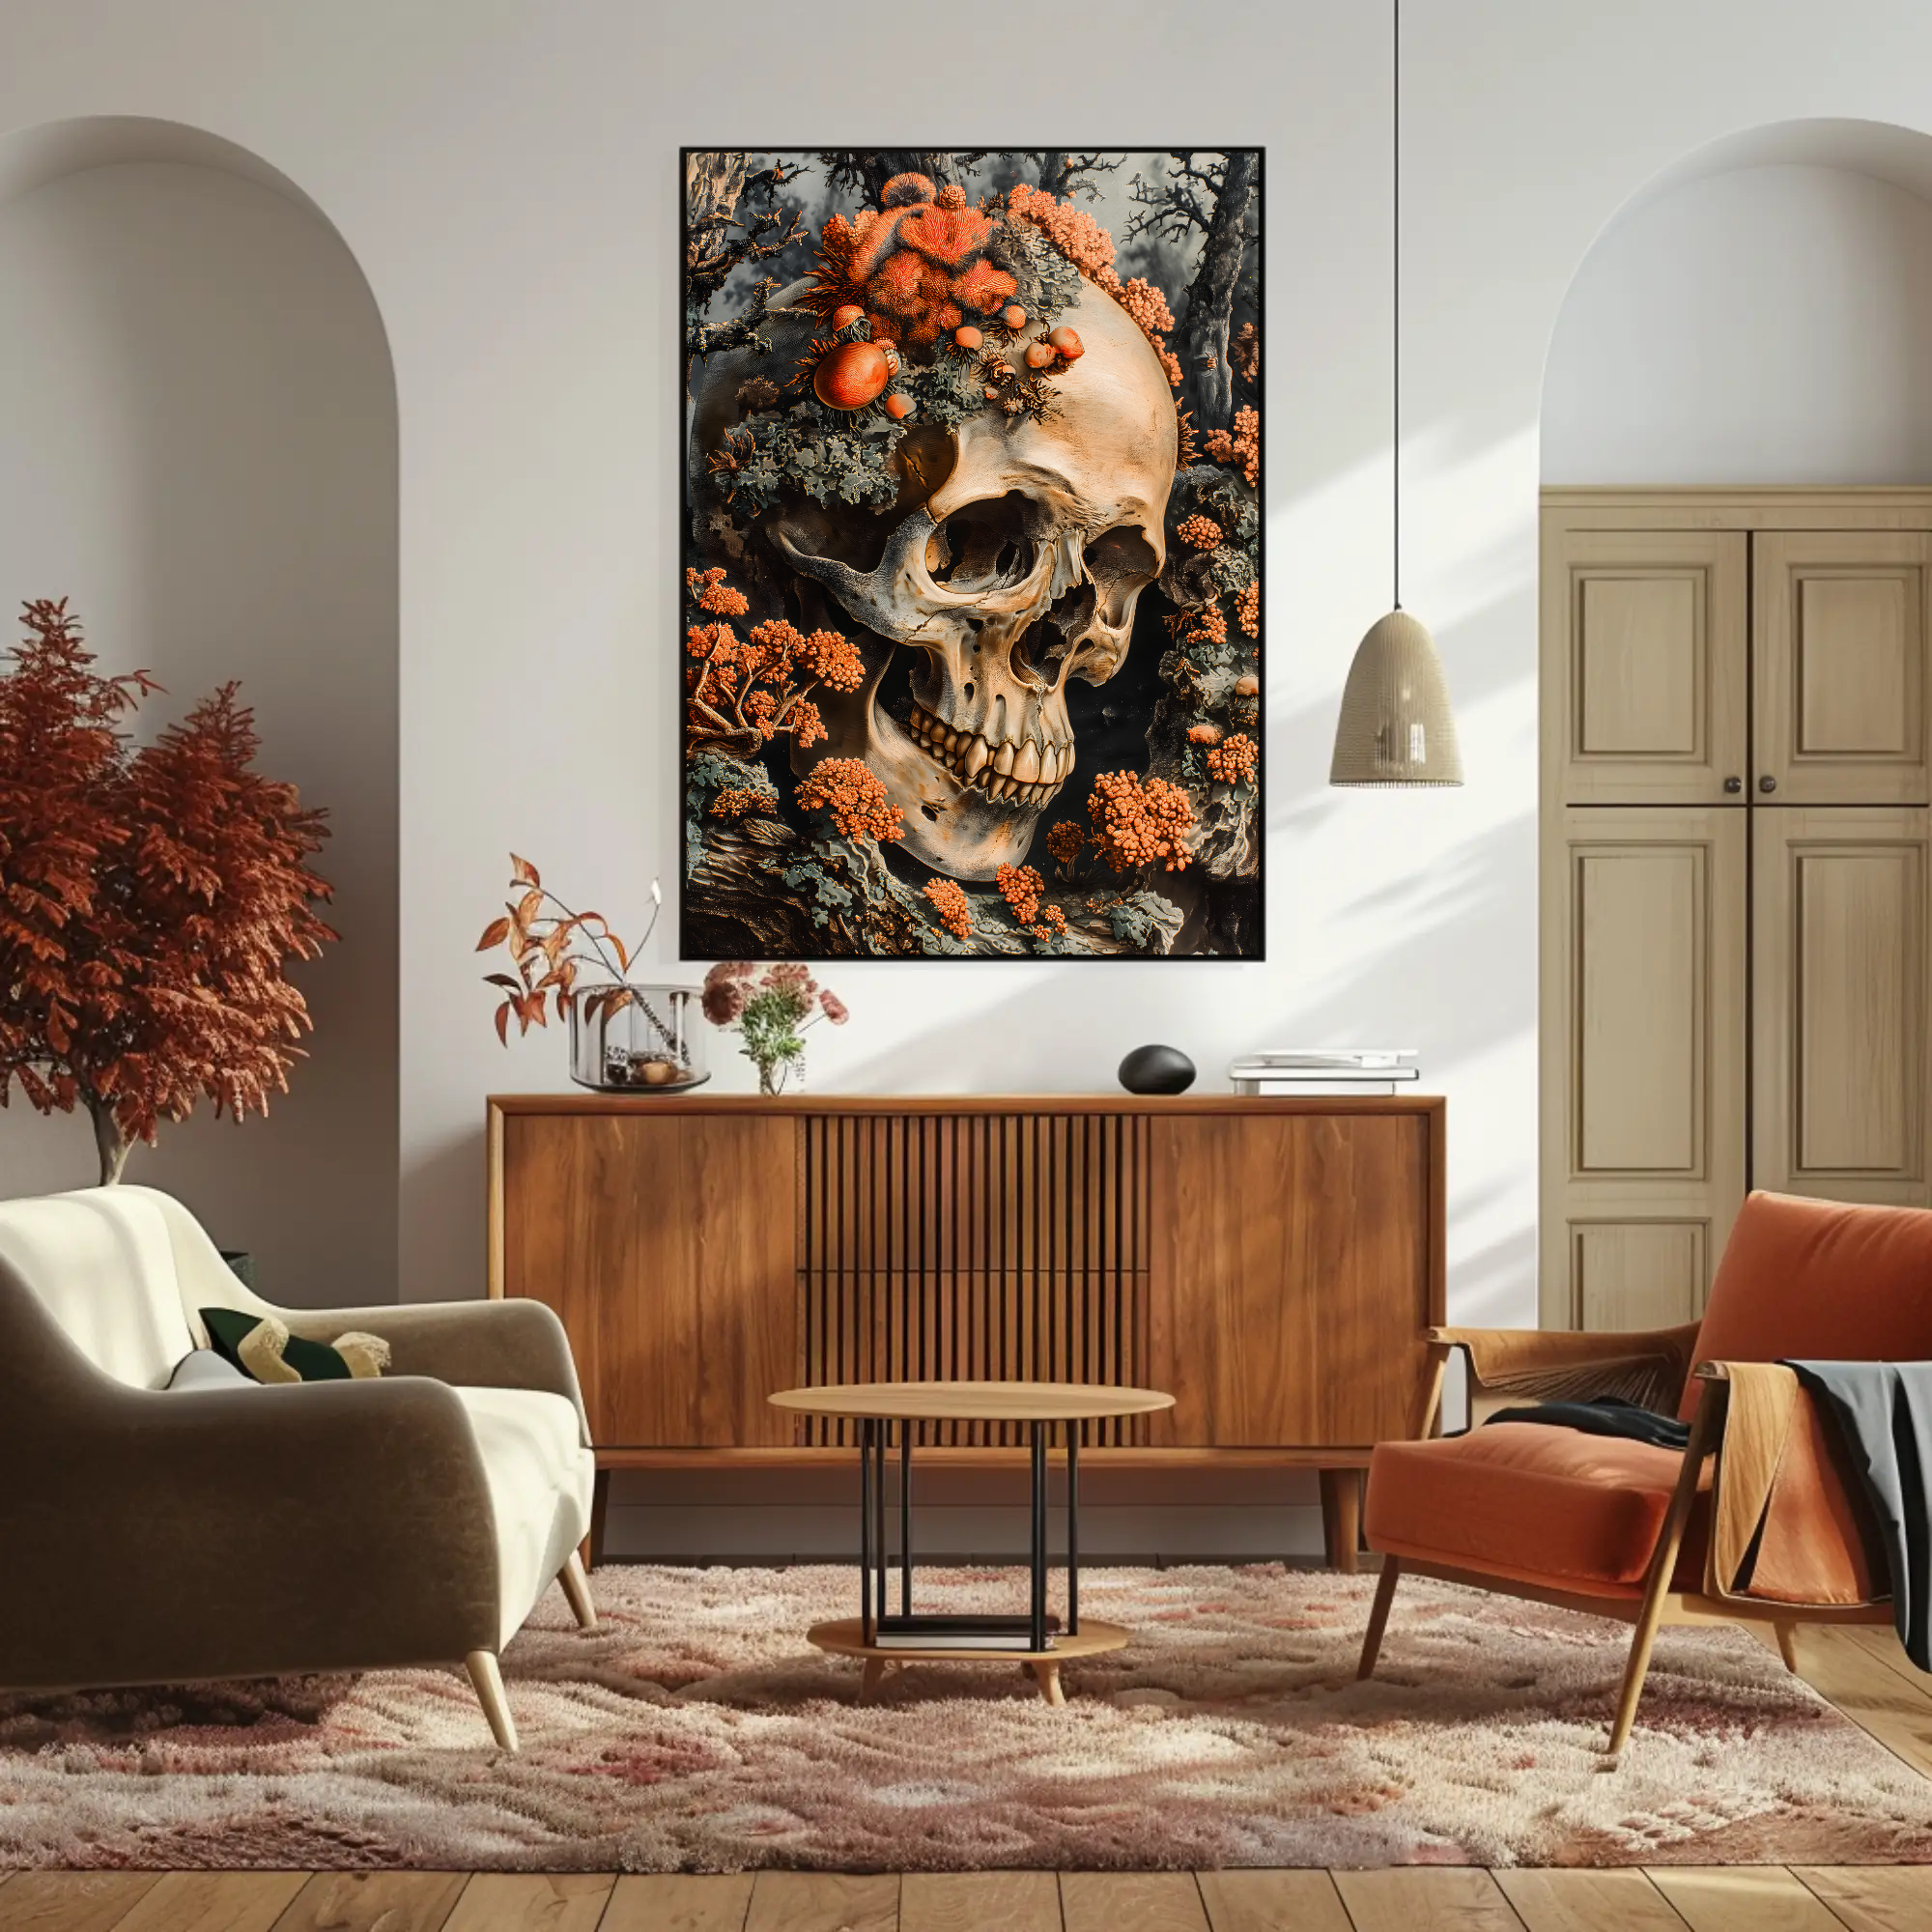 Cranial Bloom Wall Art: Memento Mori Skull